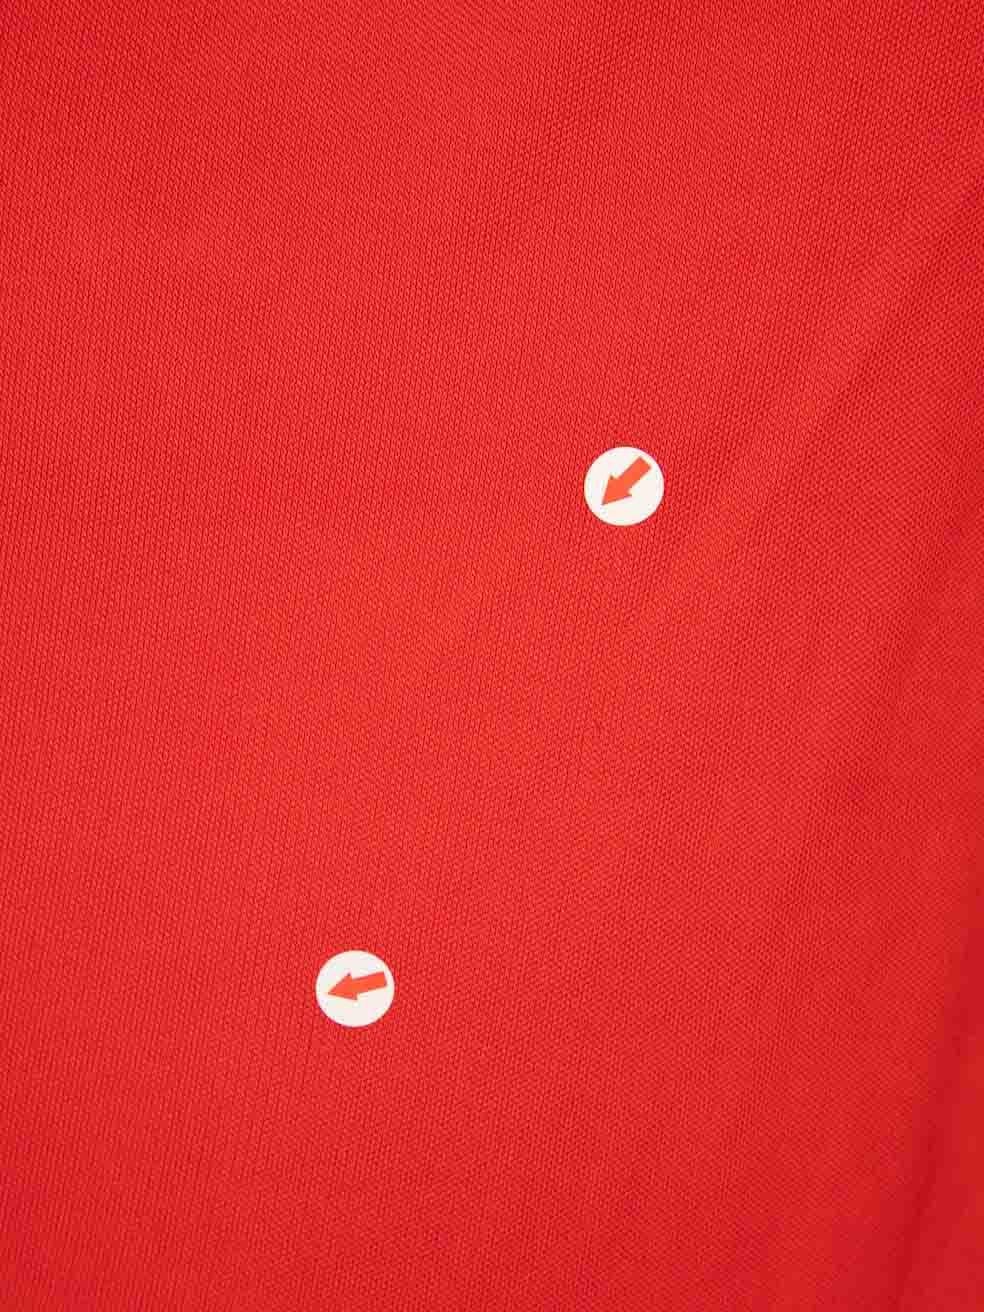 Roberto Cavalli Red One-Shoulder Drape Mini Dress Size L For Sale 2